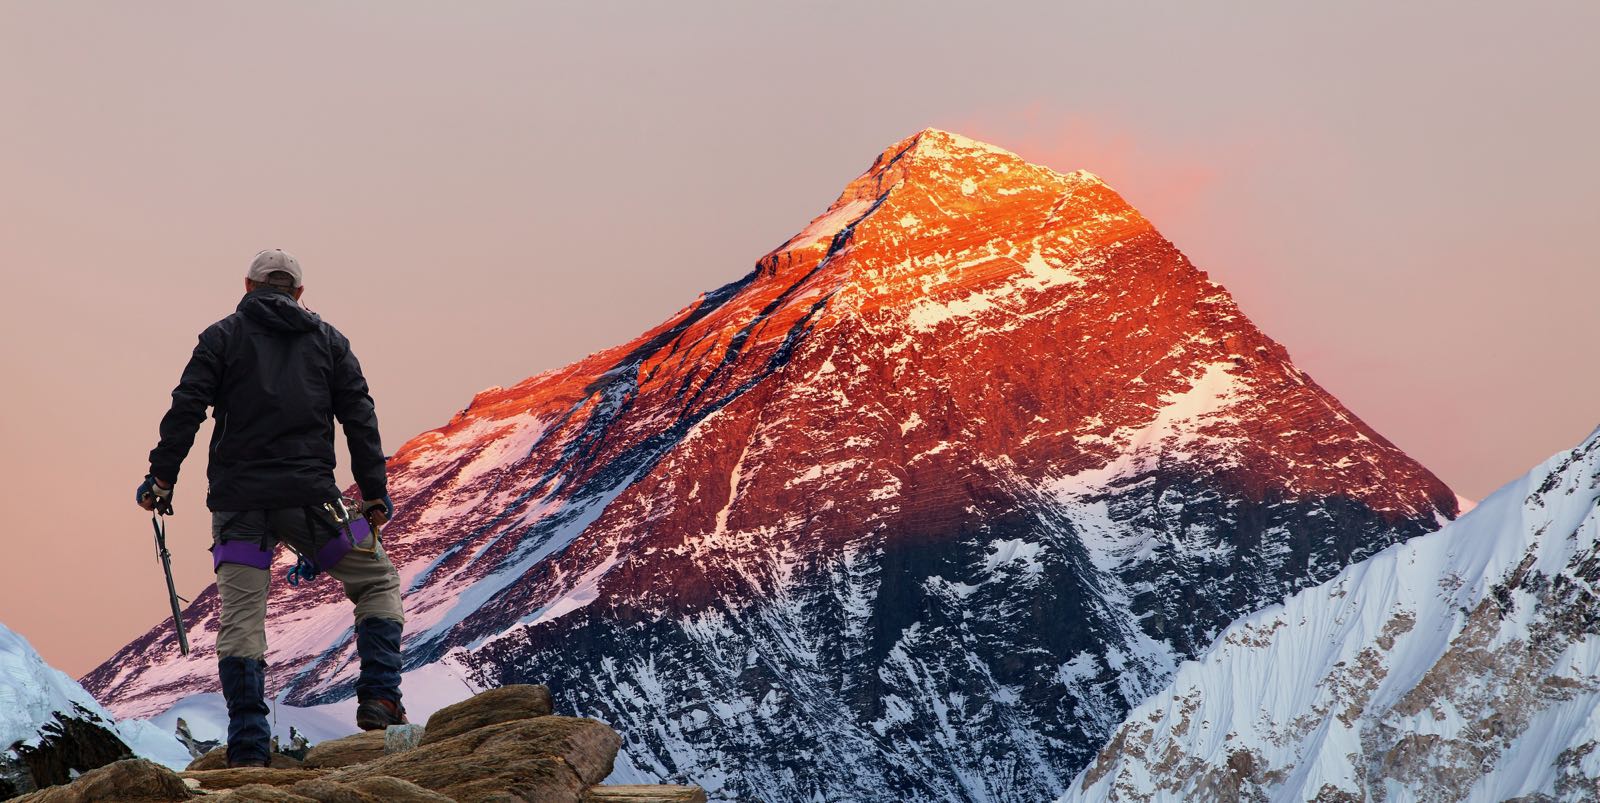 Trek the mountains of Khumbu, Nepal Home of the Sherpas